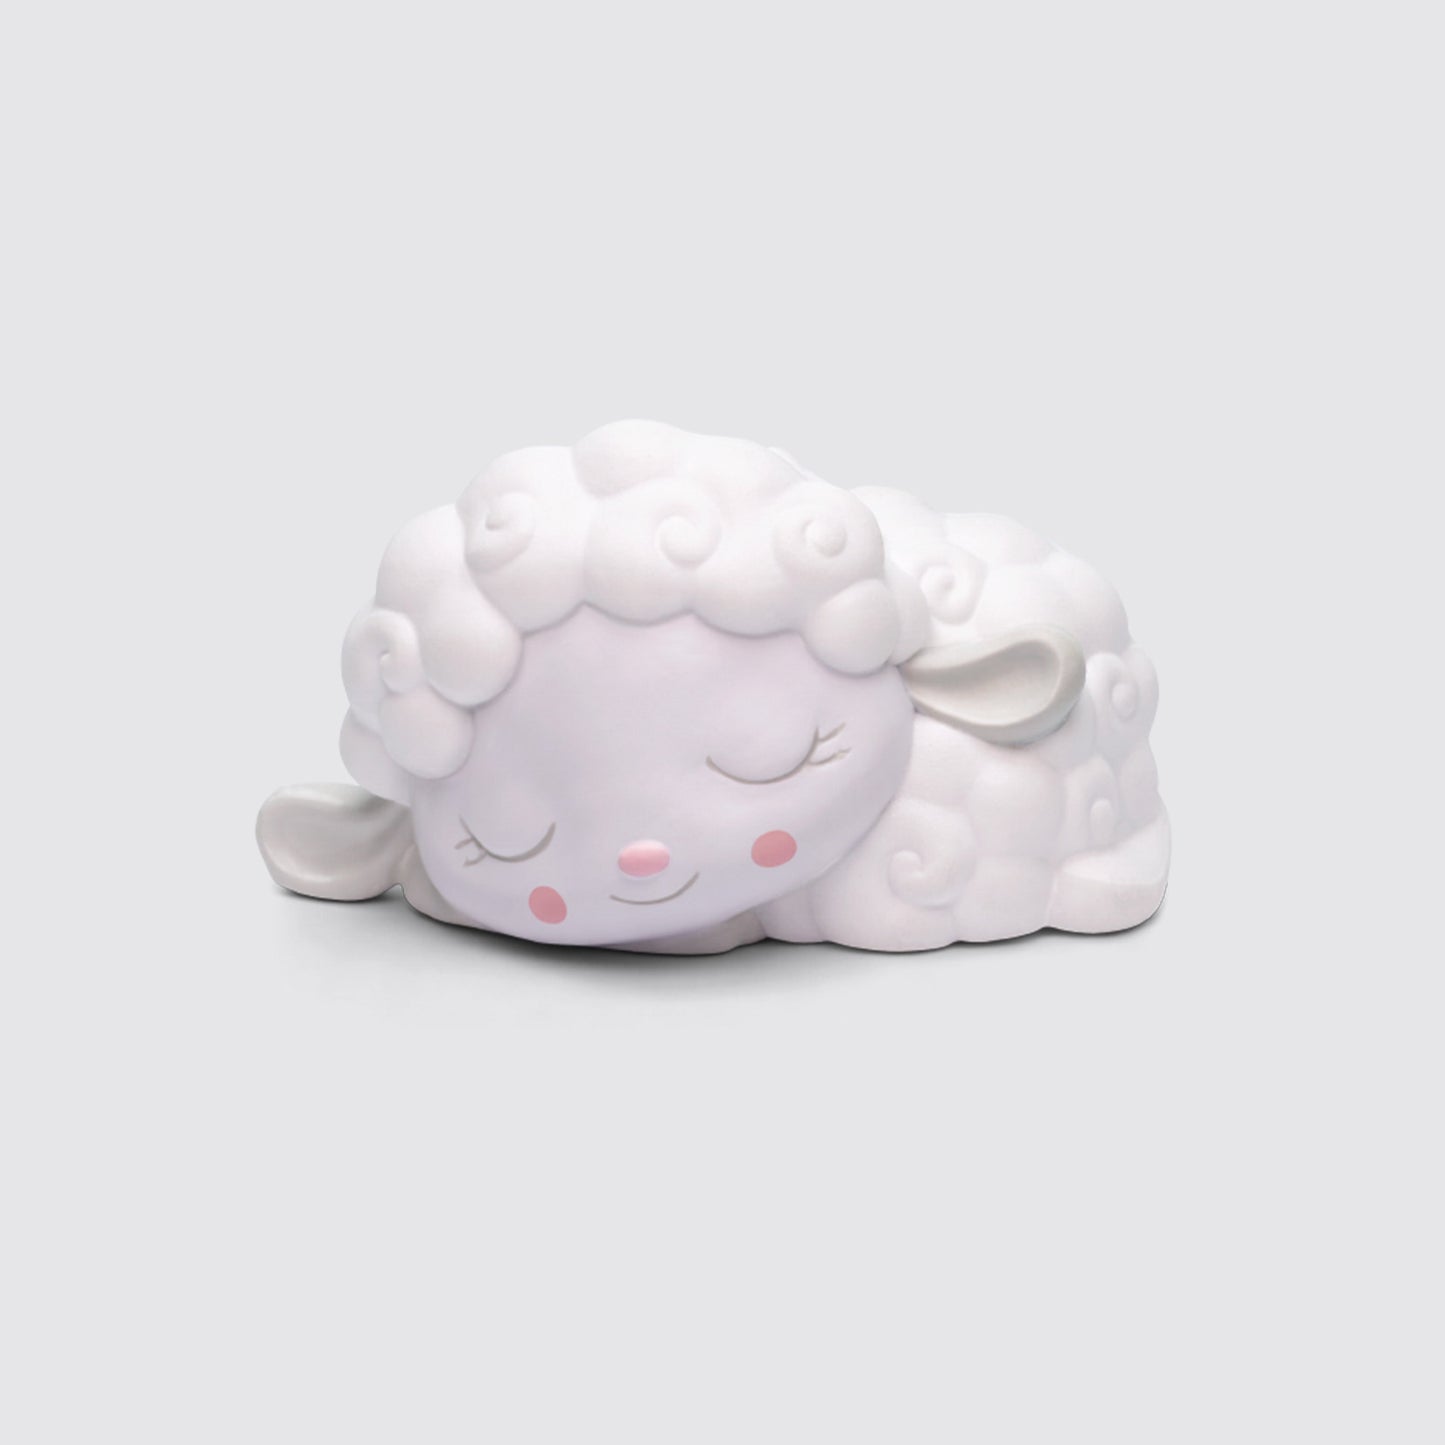 Sleepy Friends - Lullaby Melodies with Sleepy Sheep